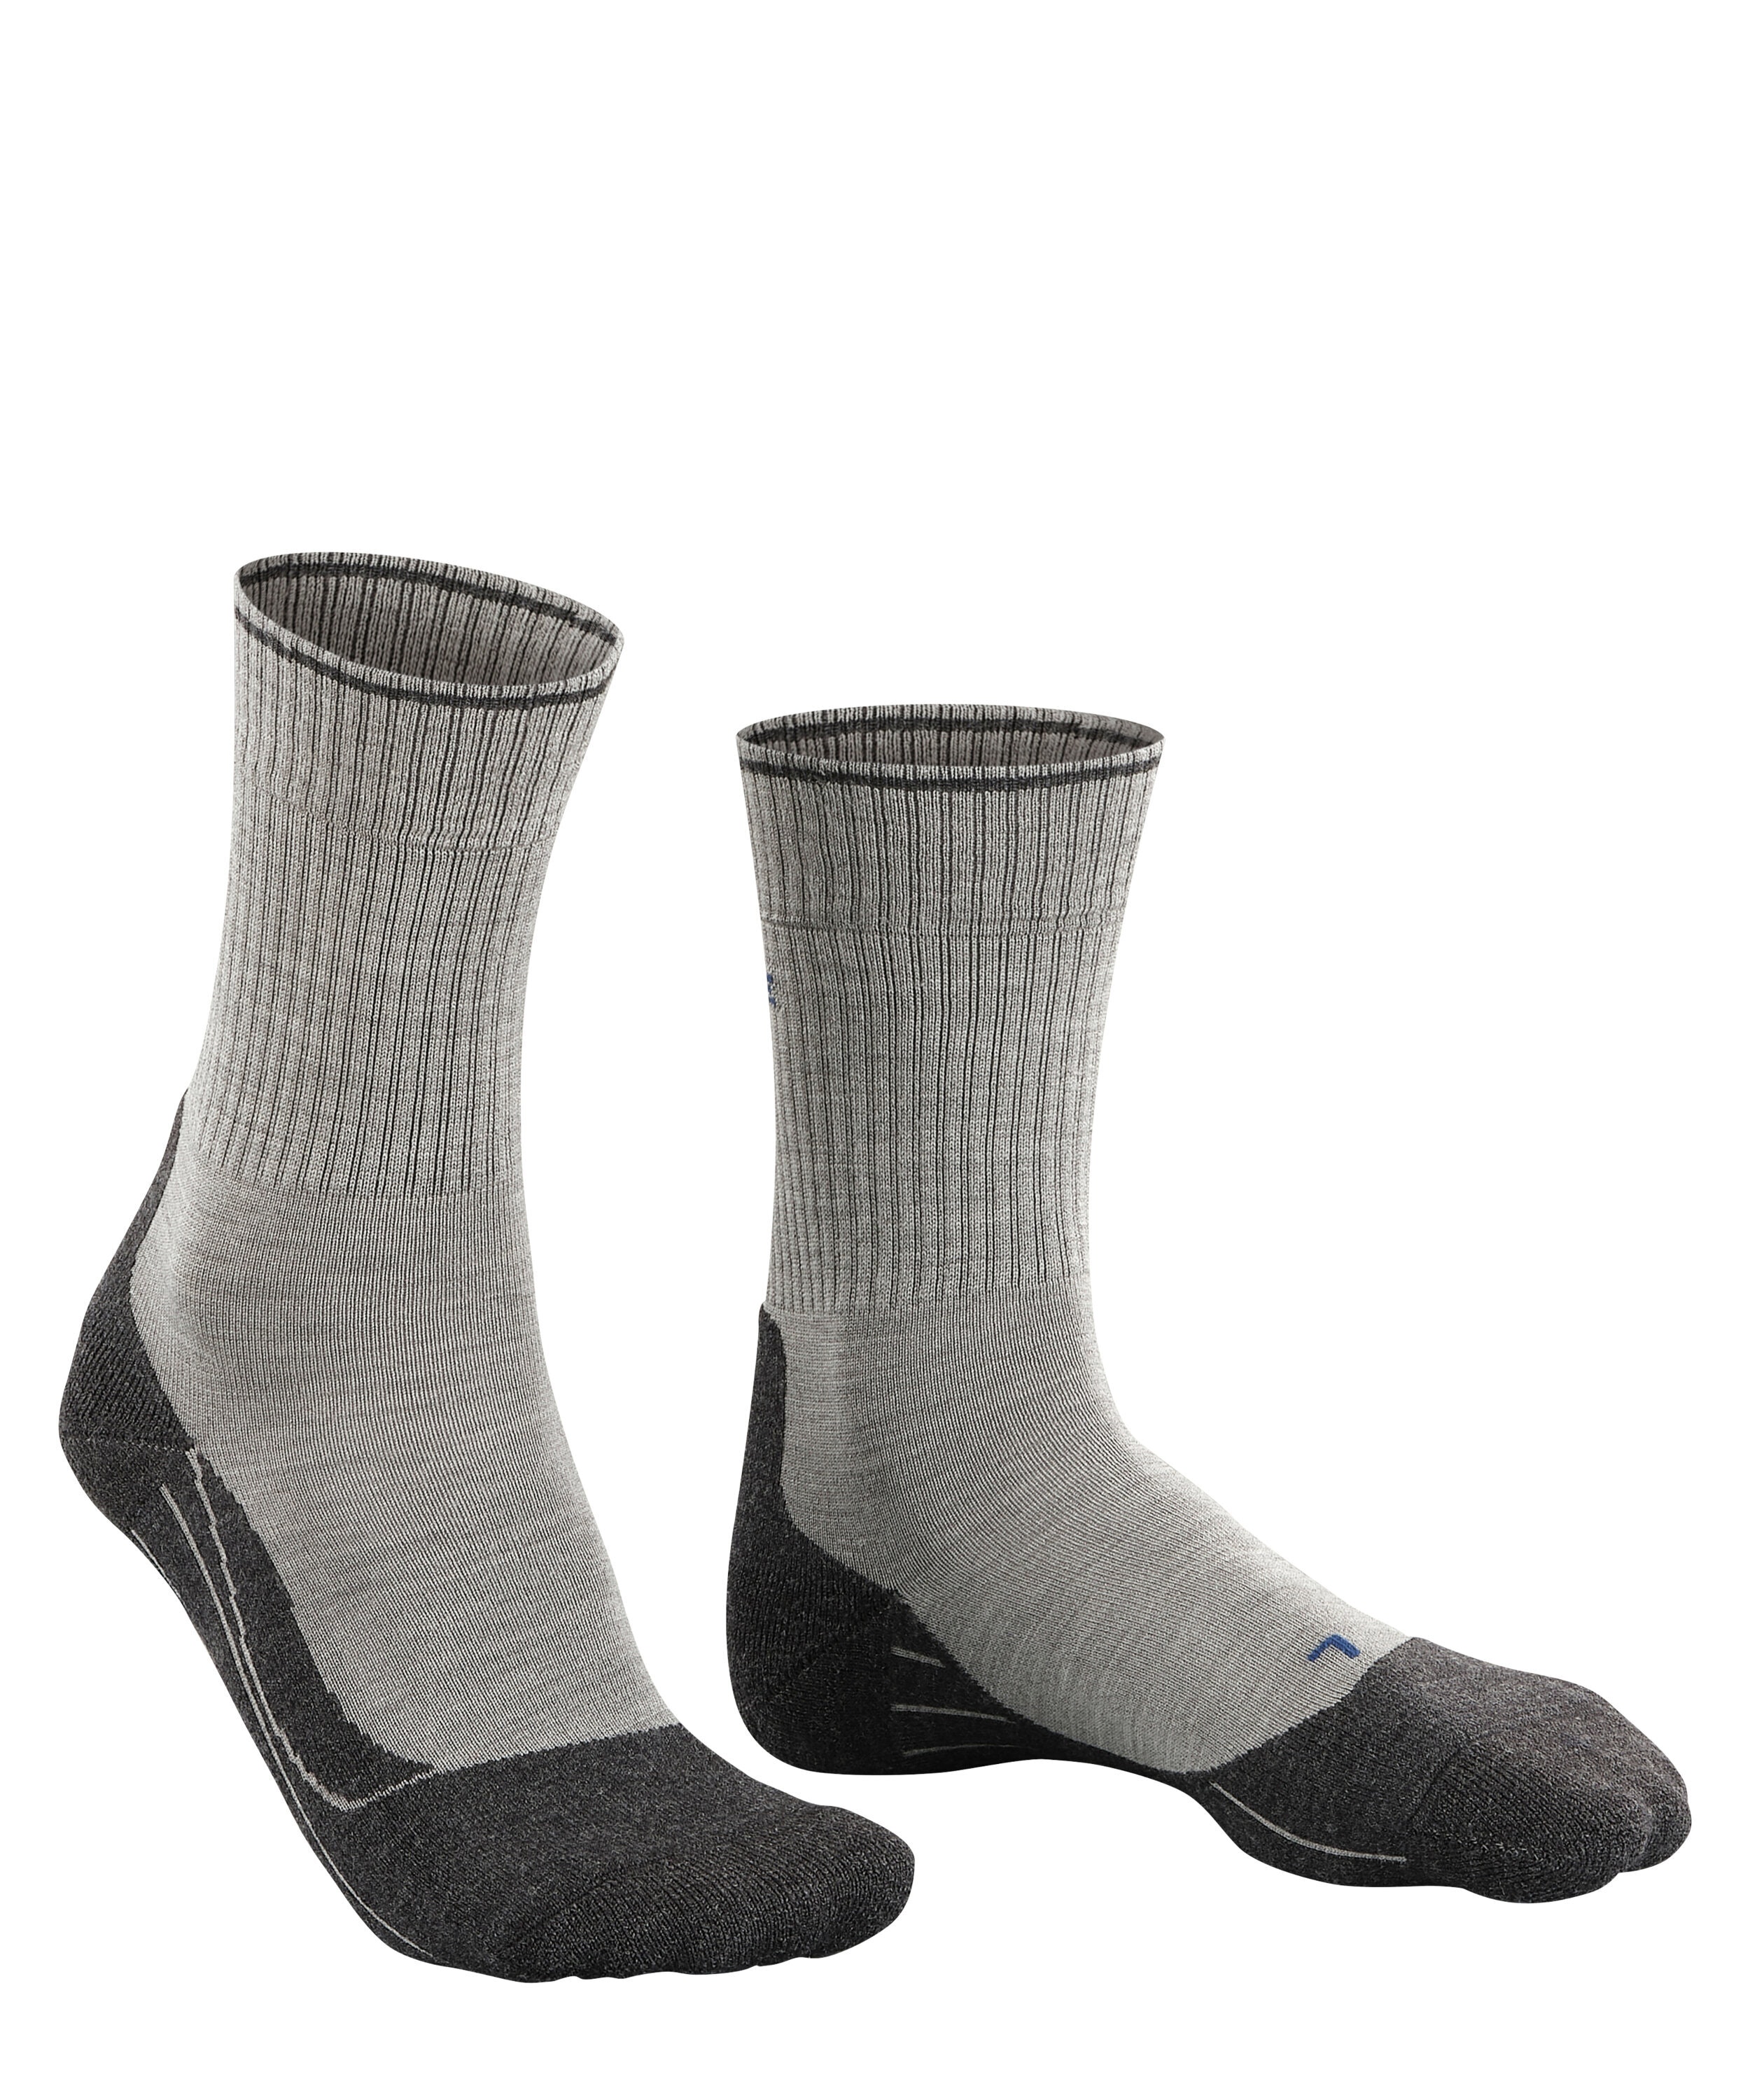 FALKE TK2 Explore Wool Silk heren trekking sokken, grijs (light grey)